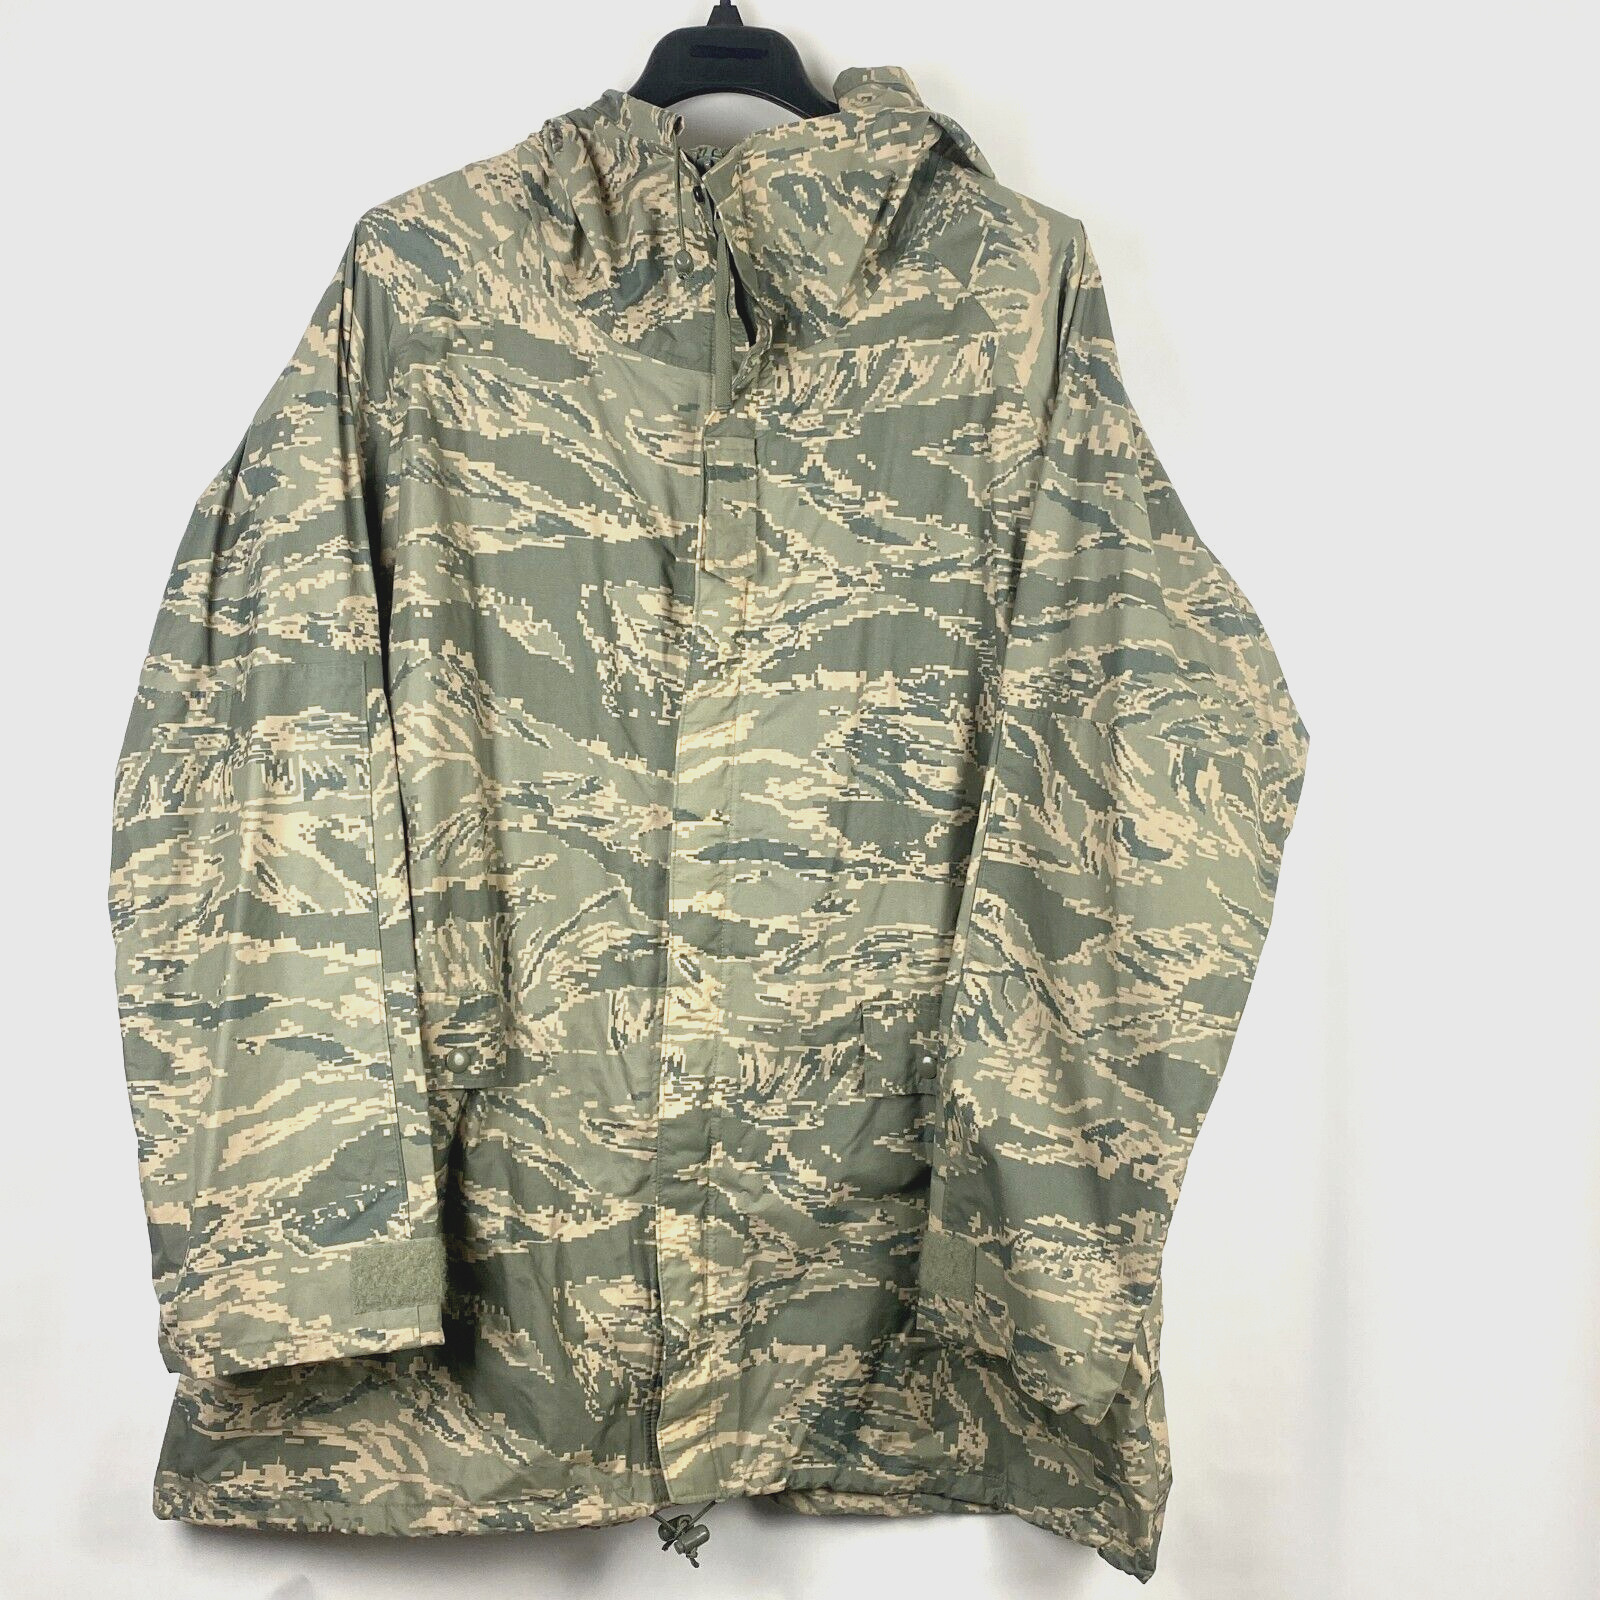 Military Orc Improved Rainsuit Parka Jacket Tiger Stripe Camo ABU Army Large US